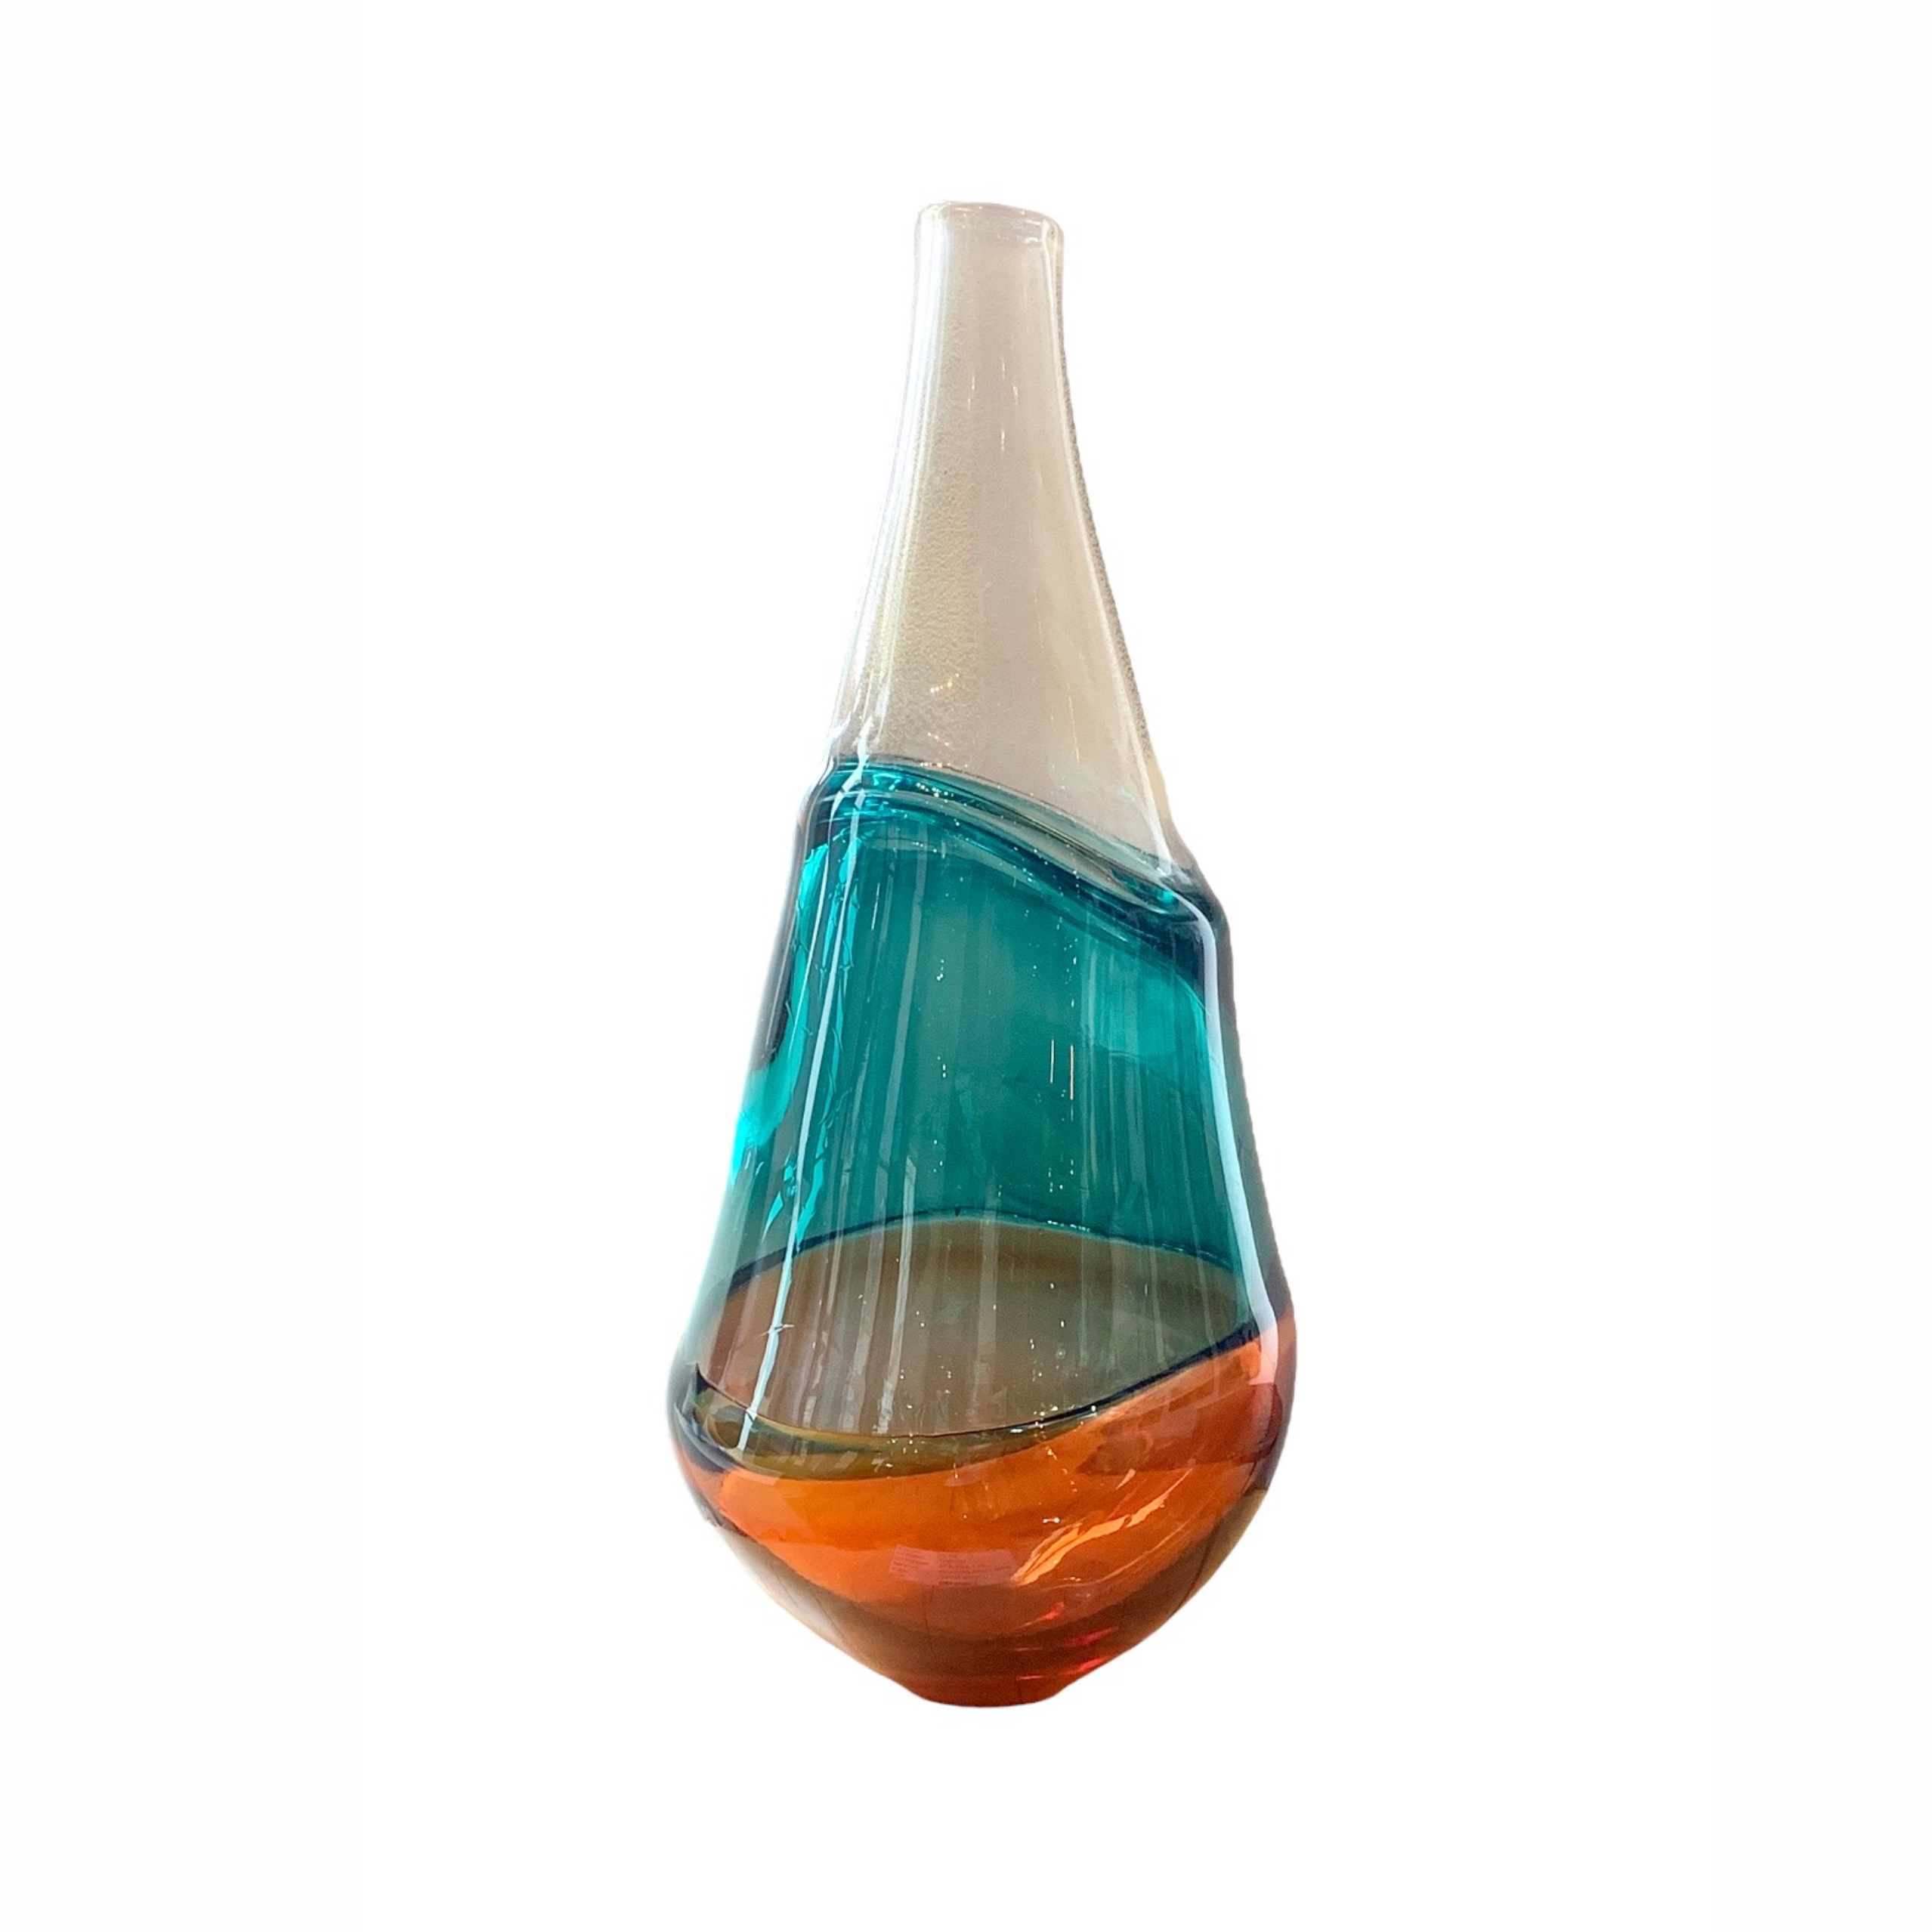 Aergia Vase, blown glass vase by Hayden MacRae | Effusion Art Gallery + Cast Glass Studio, Invermere BC